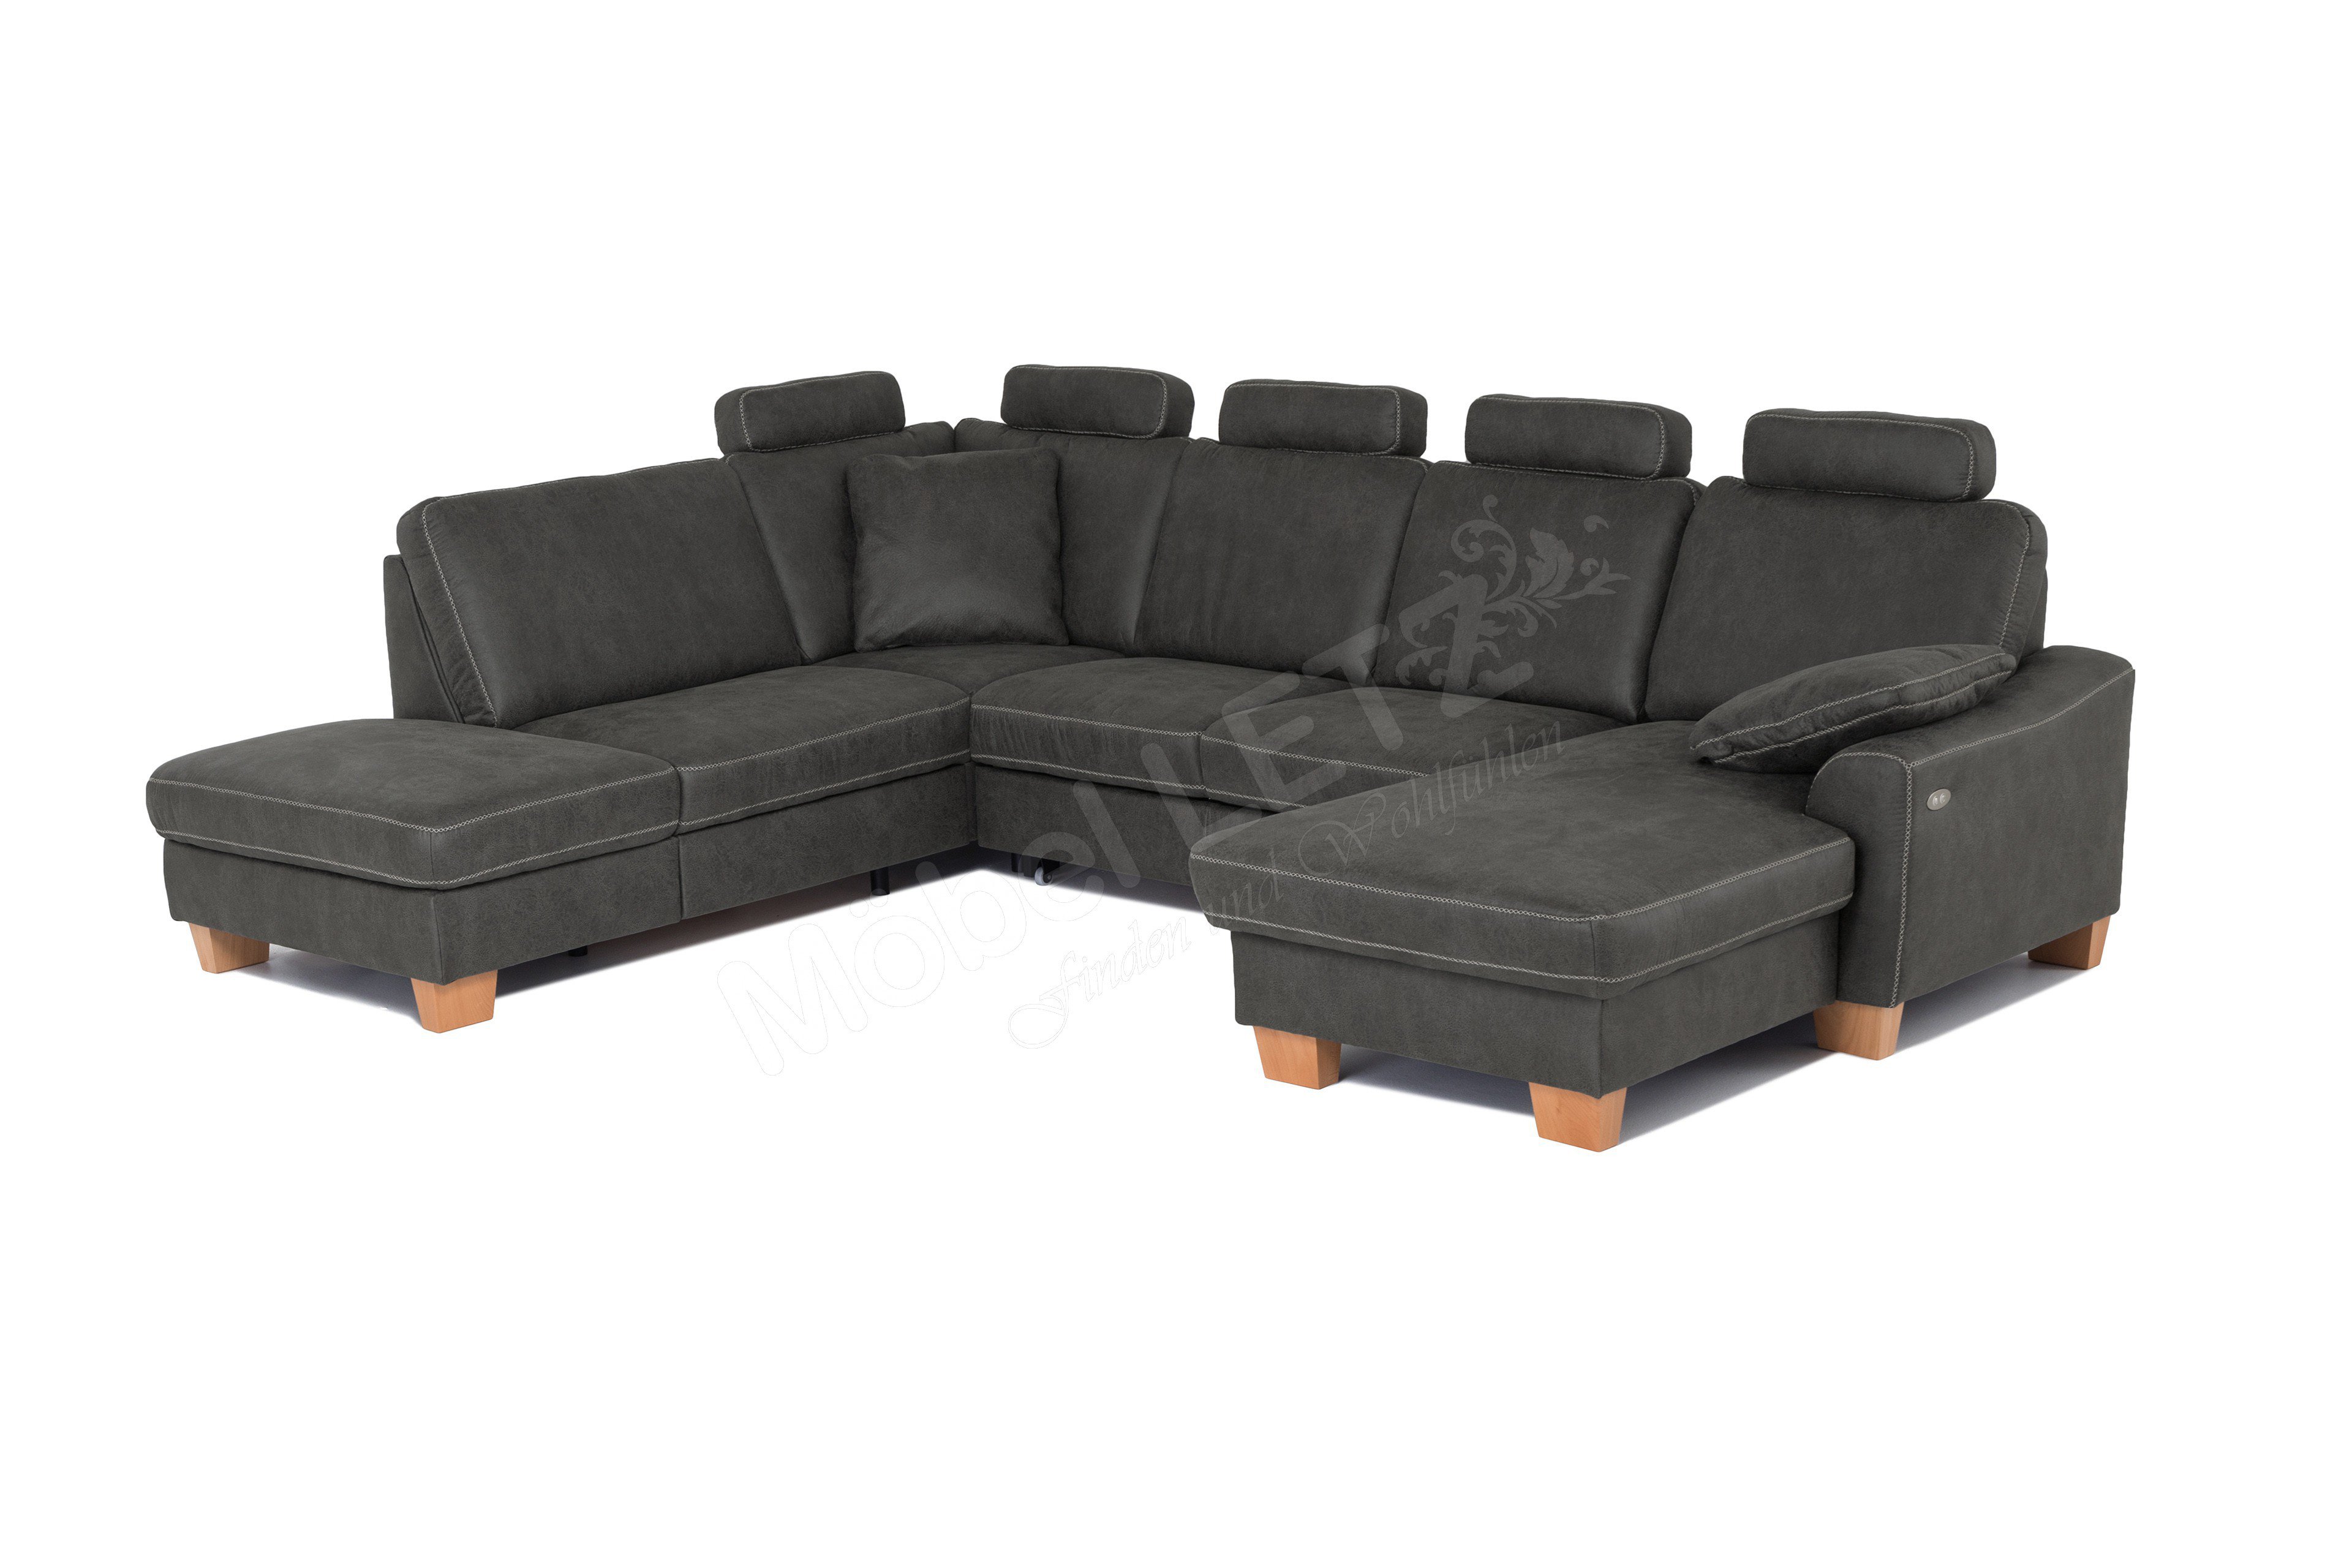 Zehdenick ZE-EM15049 Couch in U-Form inklusvie 2 Kopfstützen in Stoff